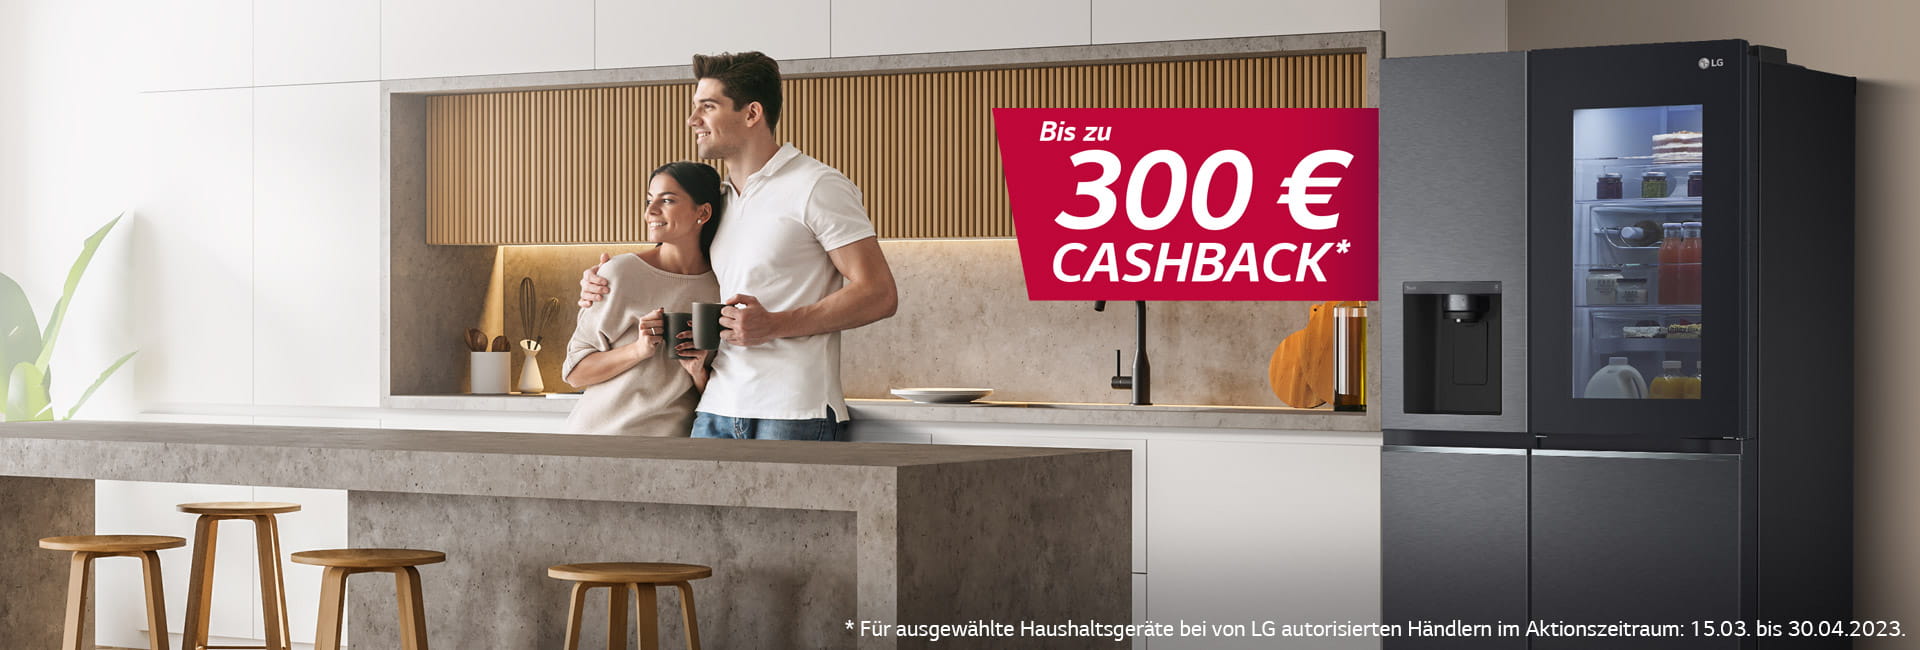 LG #luckydeals - bis zu 300 € Cashback